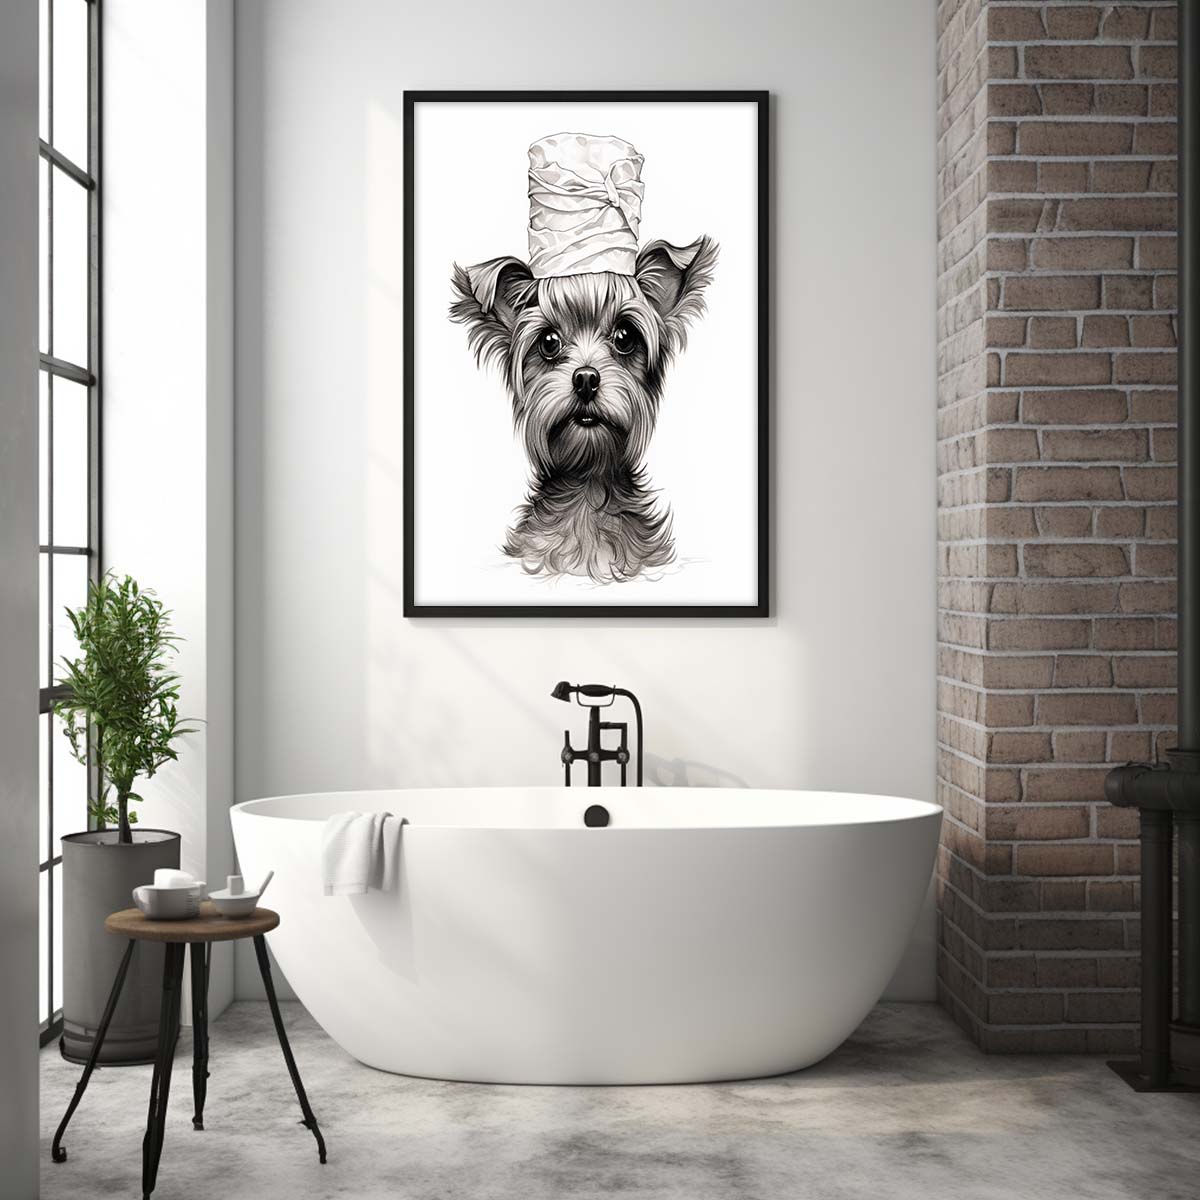 Yorkshire Terrier 02 With Toilet Paper Canvas Art, Yorkshire Terrier With Toilet Paper, Funny Dog Art, Bathroom Wall Decor, Home Decor, Bathroom Wall Art, Dog Wall Decor, Animal Decor, Pet Gift